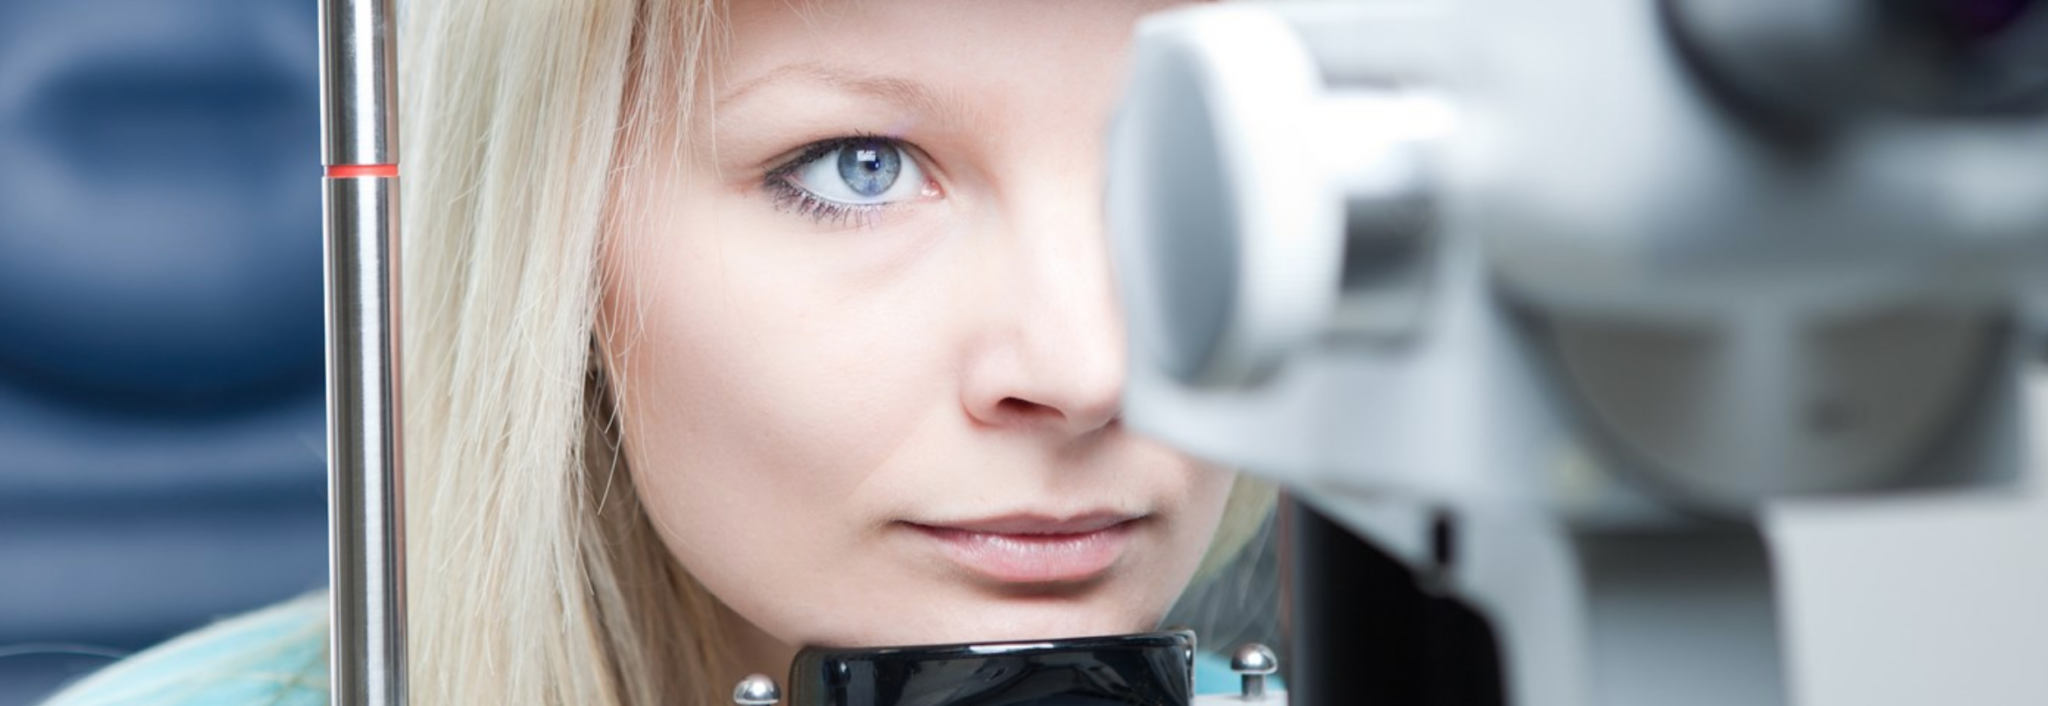 Woman taking a refractory eye exam